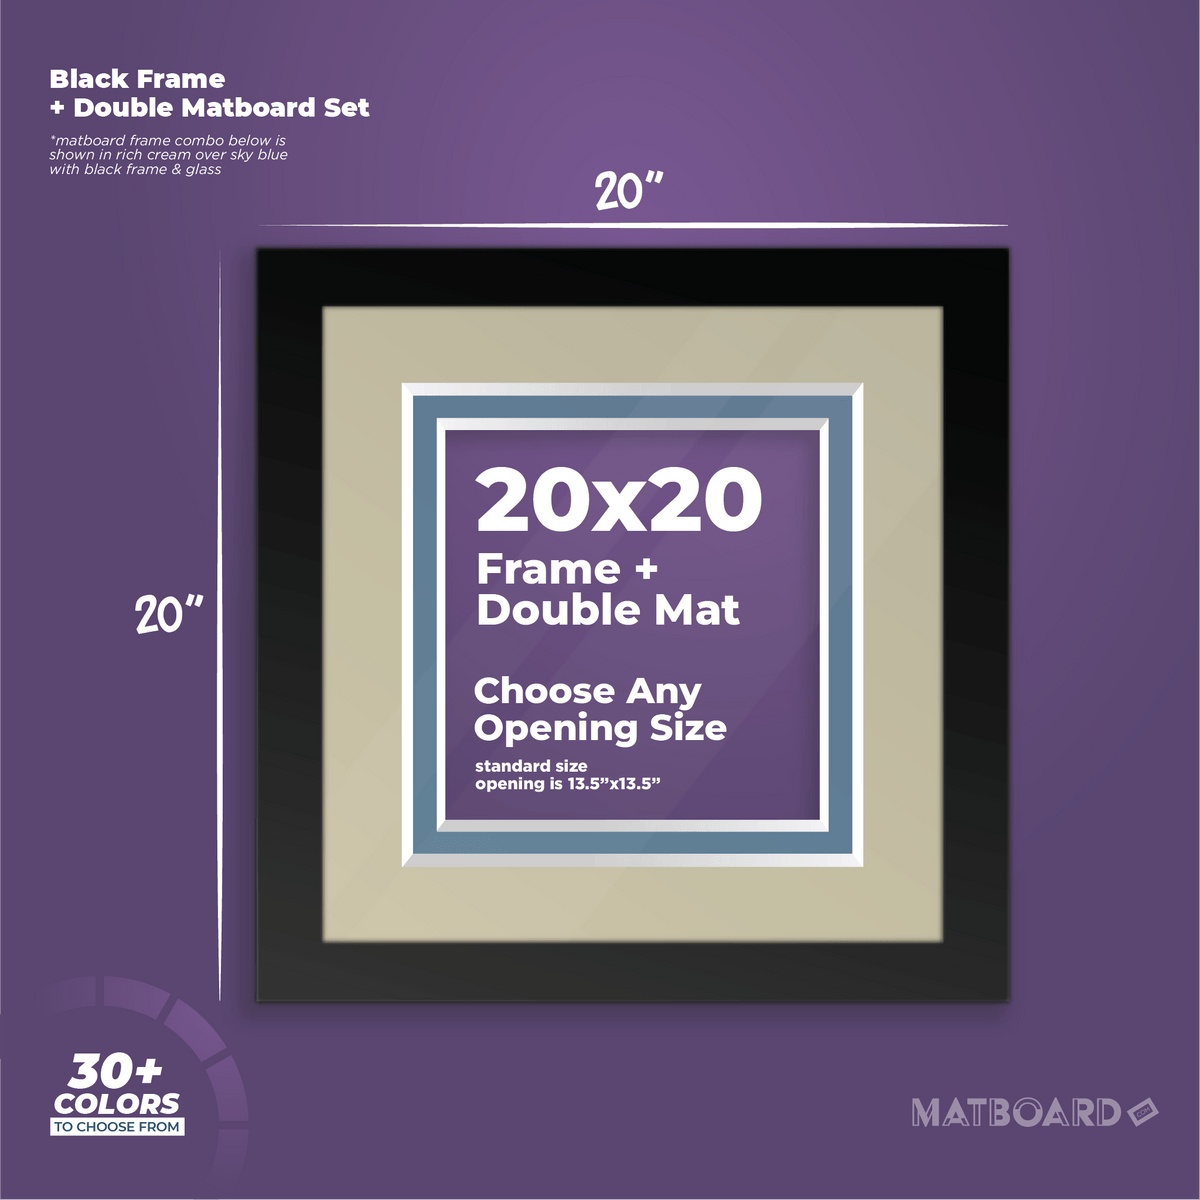 20x20 Frame + Double Mat – Matboarddotcom